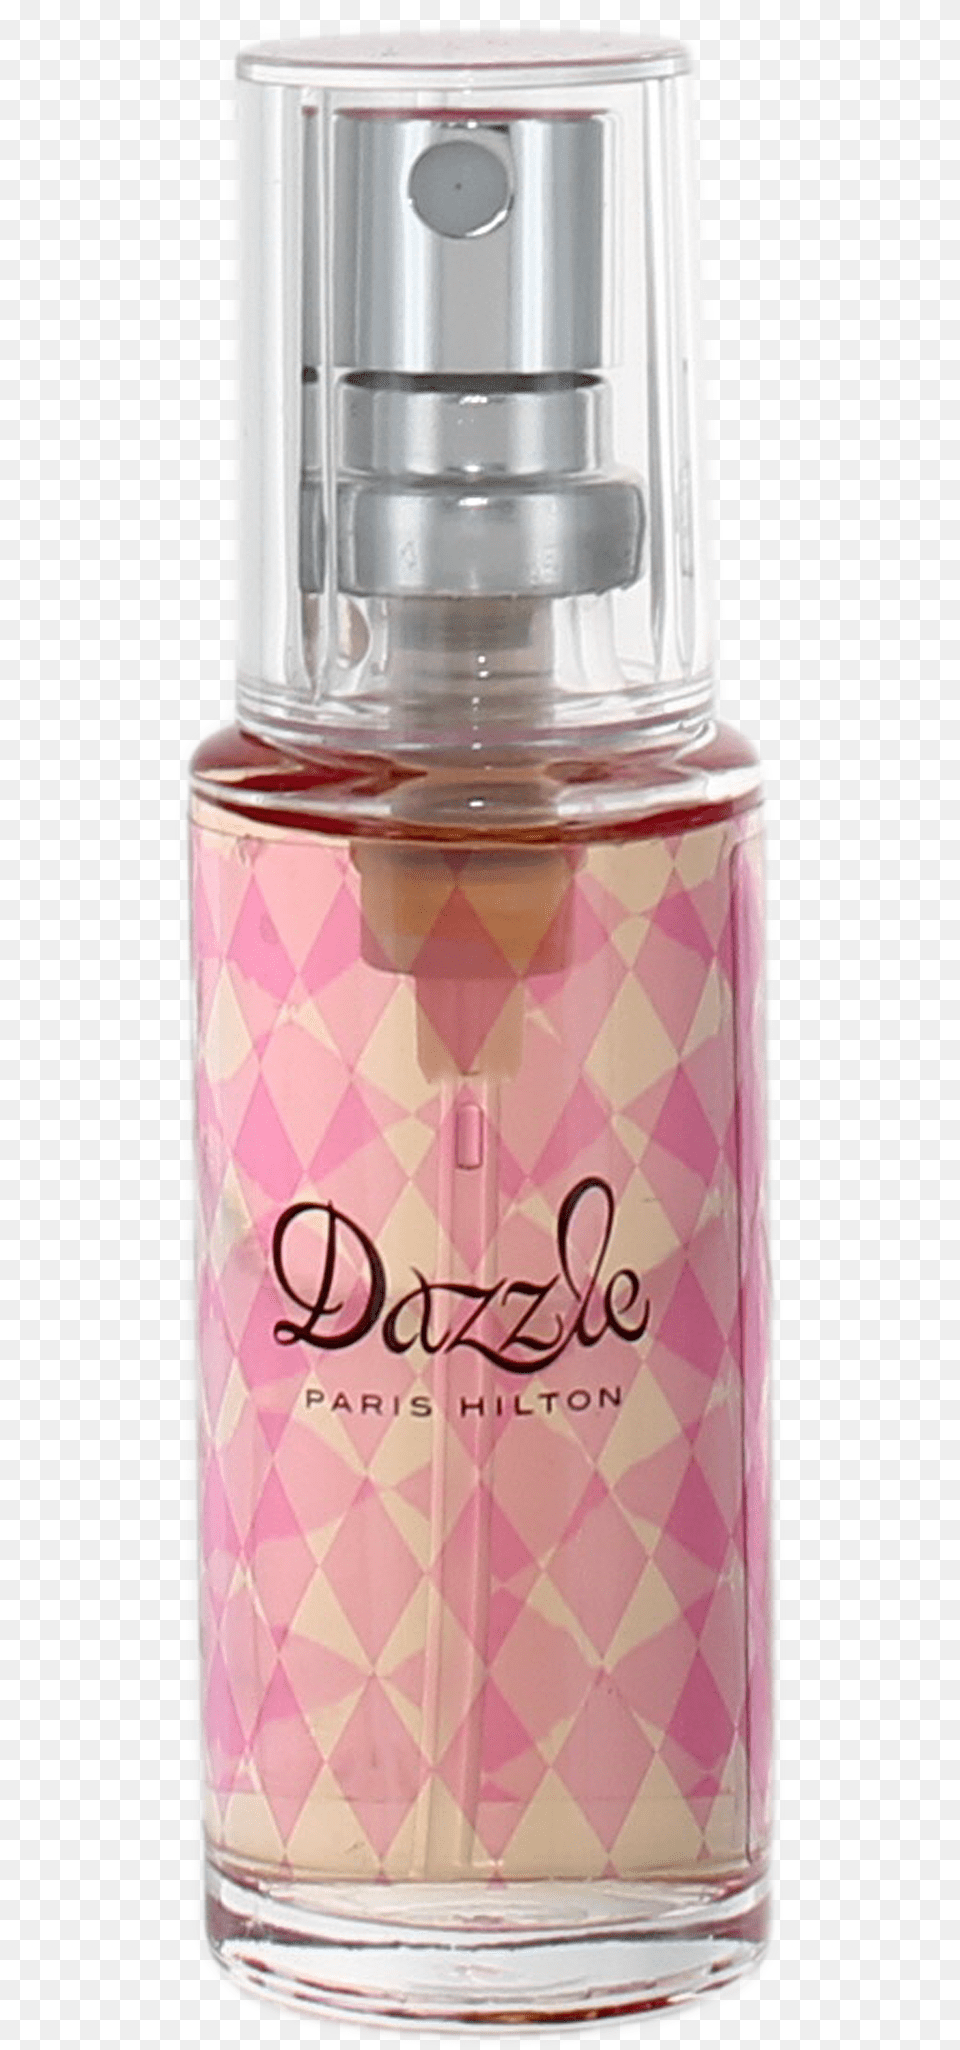 Dazzle By Paris Hilton For Women Miniature Edp Spray Perfume, Bottle, Cosmetics Free Transparent Png